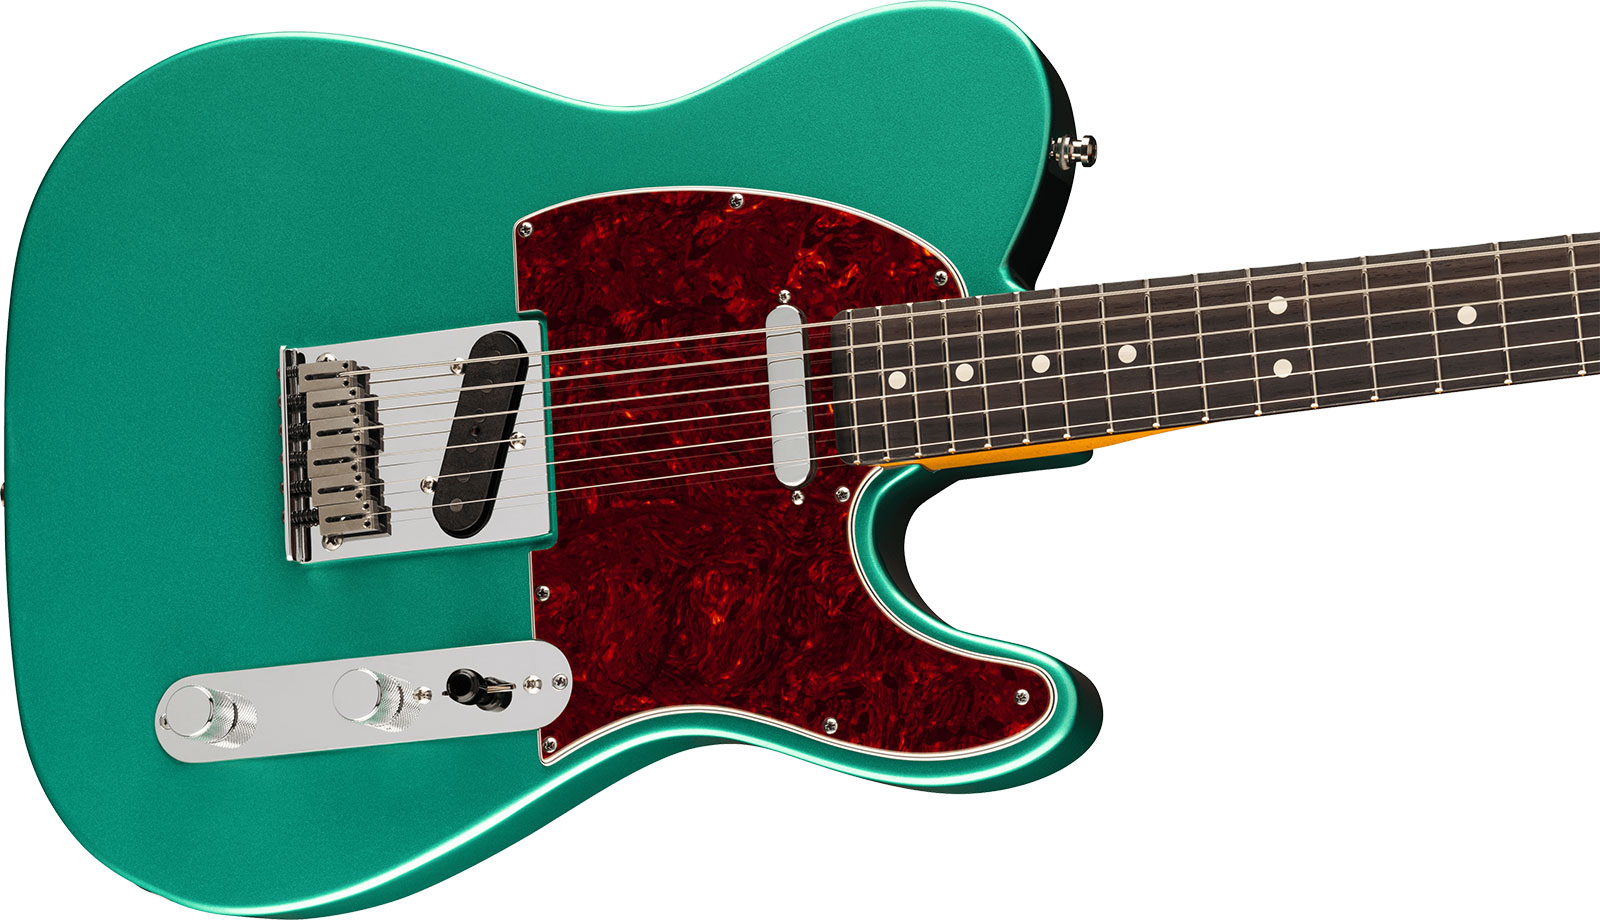 Fender Susan Tedeschi Tele Usa Signature 2s Ht Rw - Aged Caribbean Mist - Televorm elektrische gitaar - Variation 2